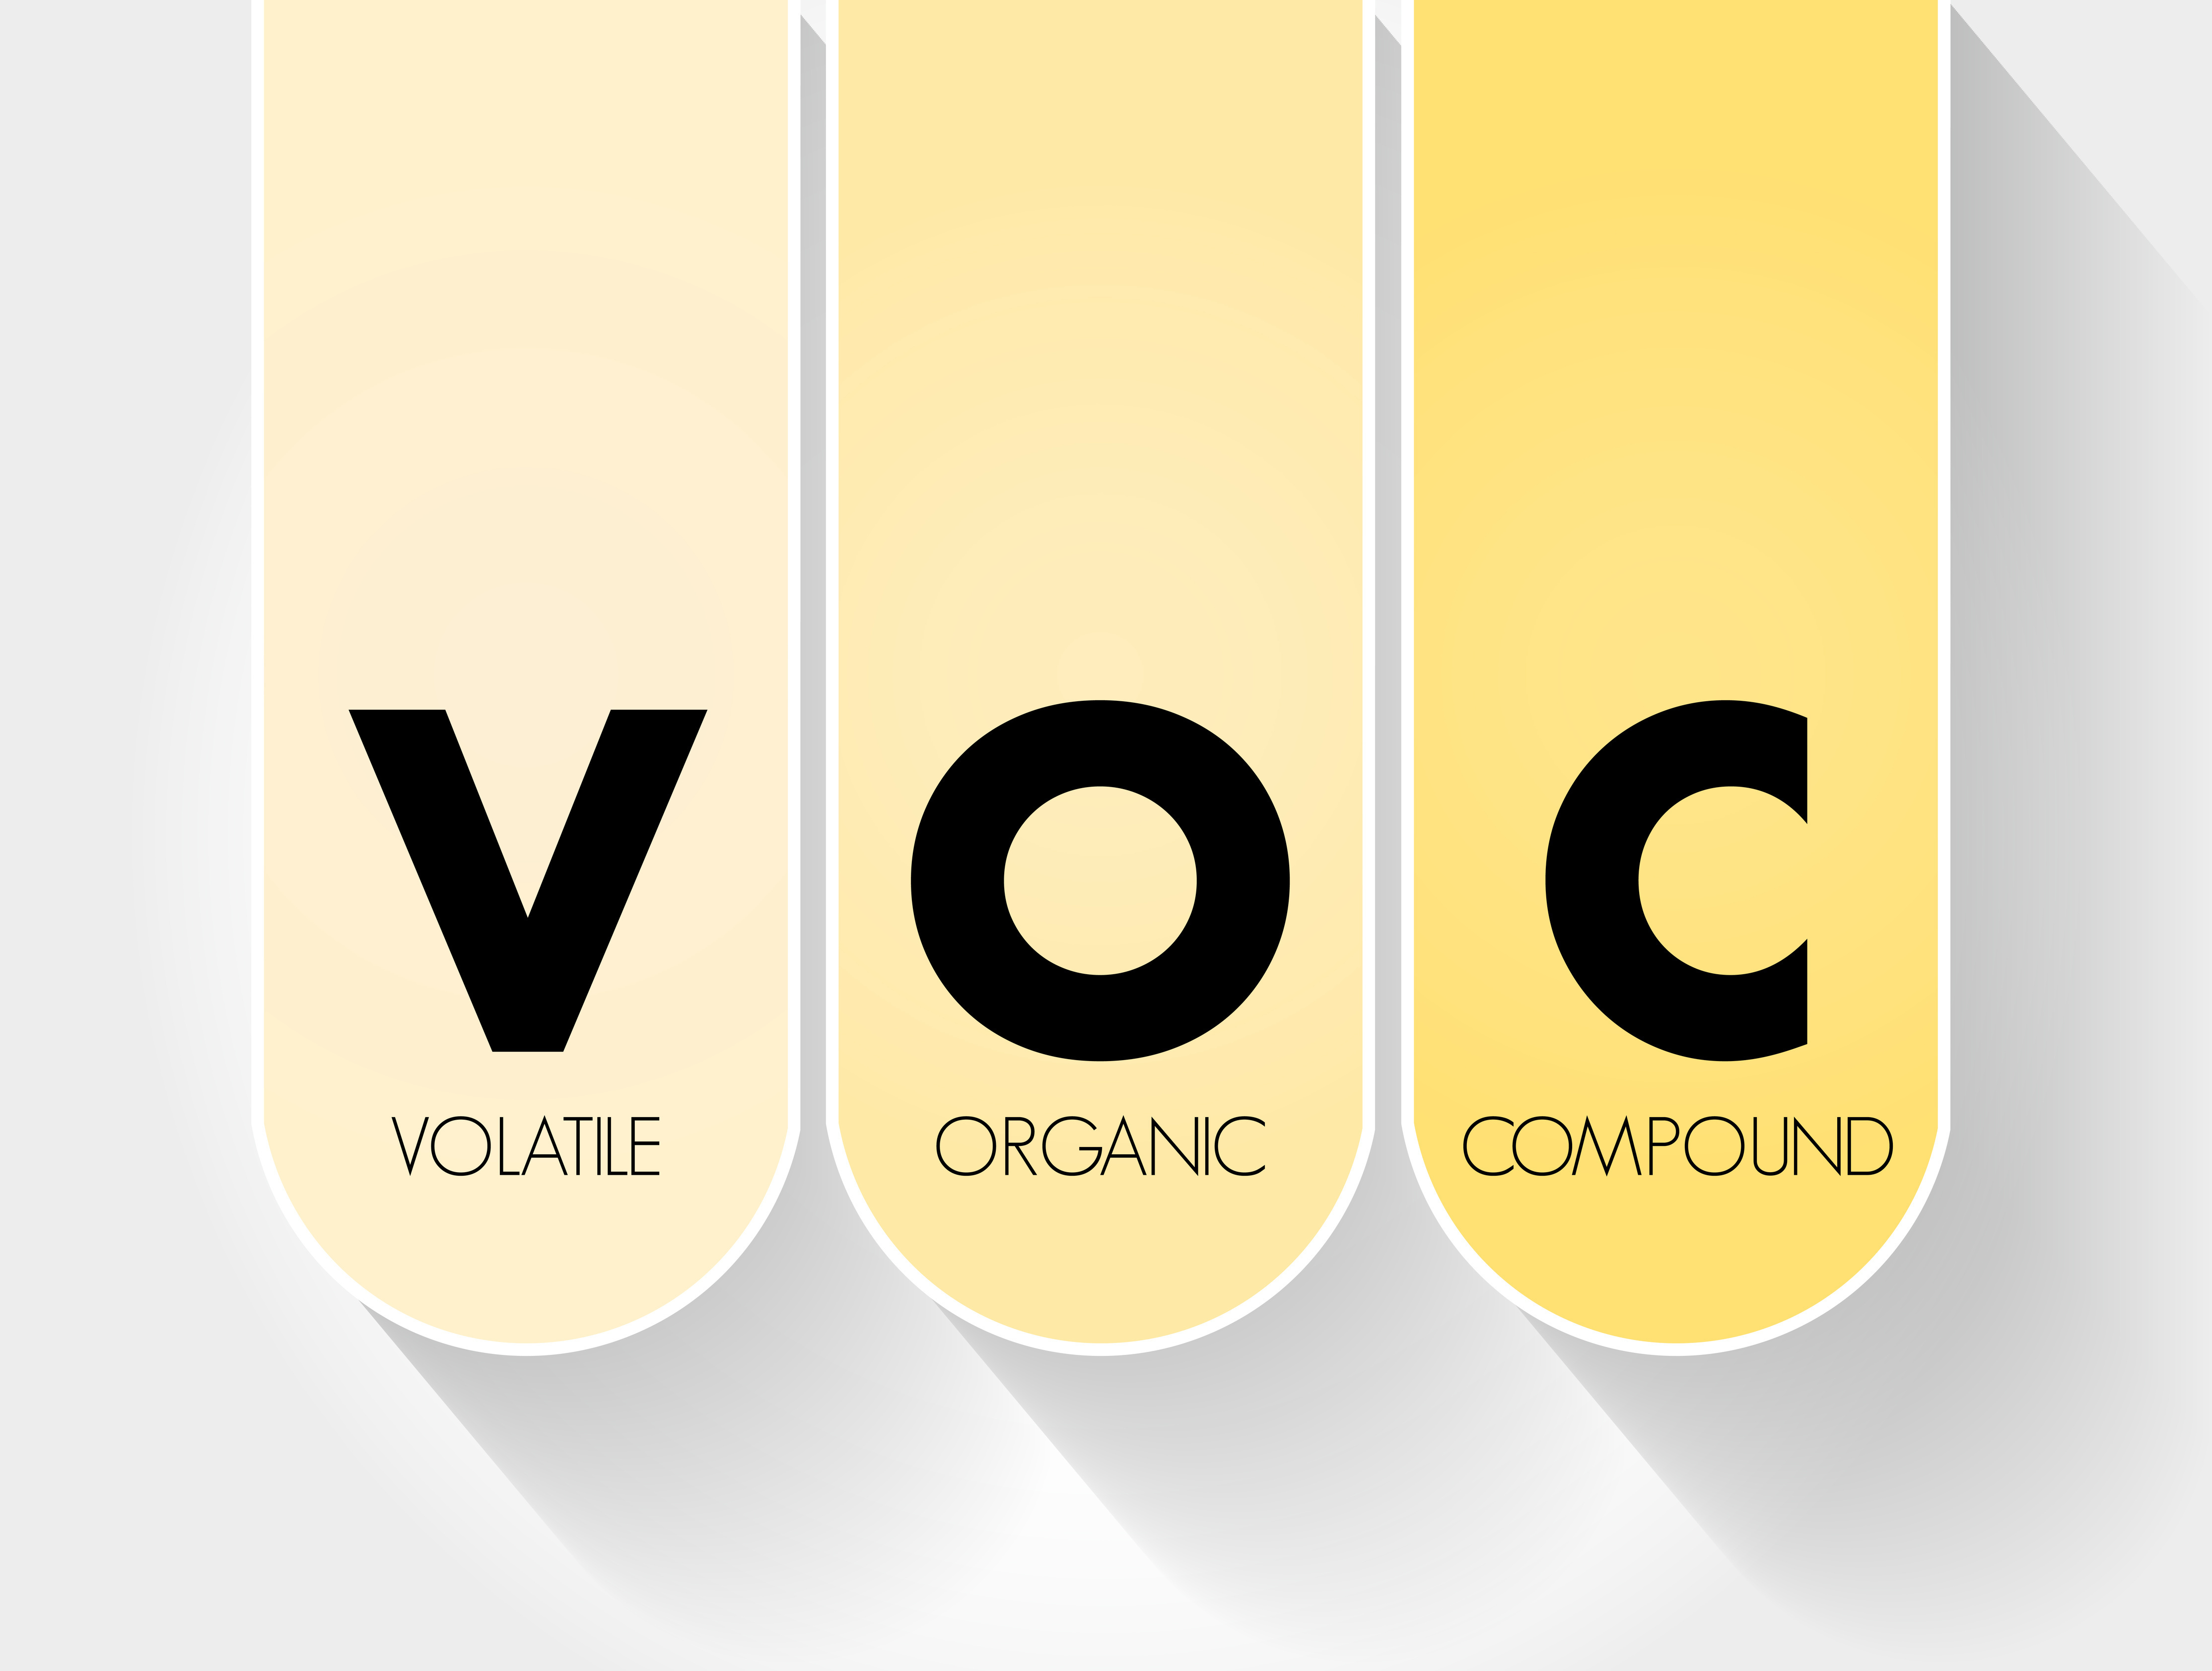 Analysis of volatile organic compounds (VOCs)